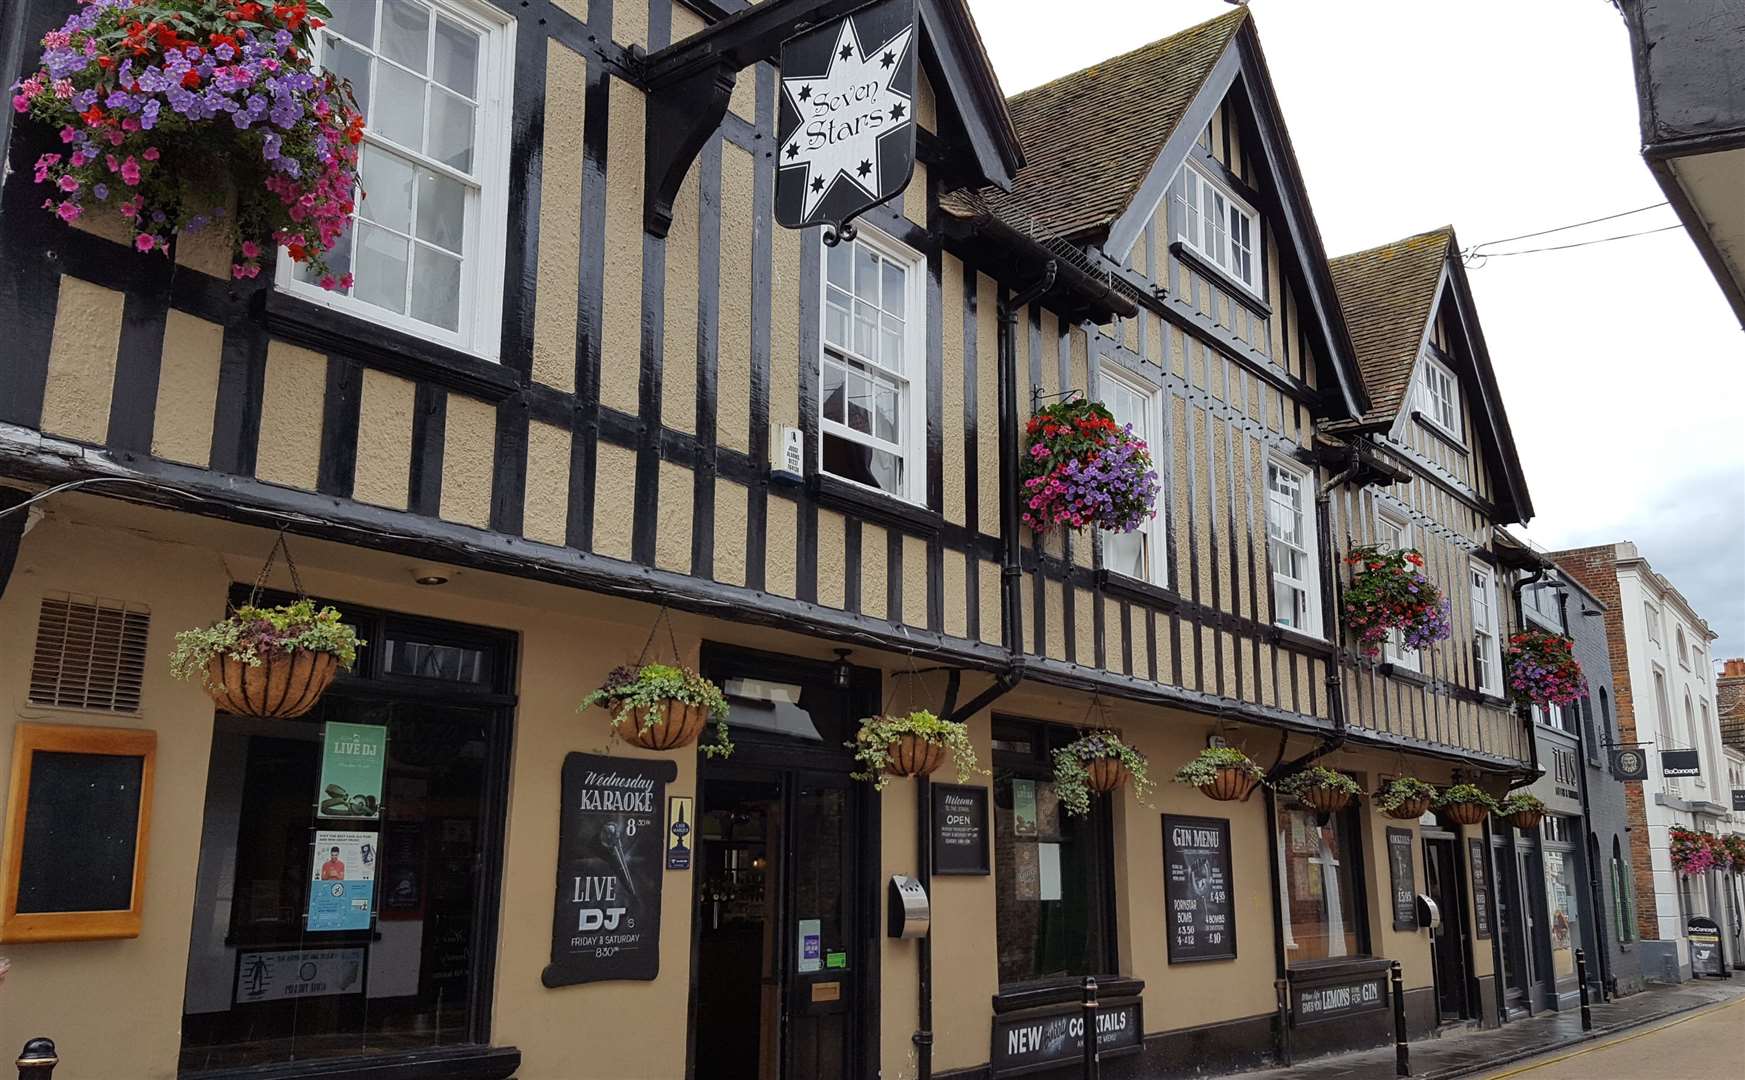 The Seven Stars pub in Sun Street, Canterbury